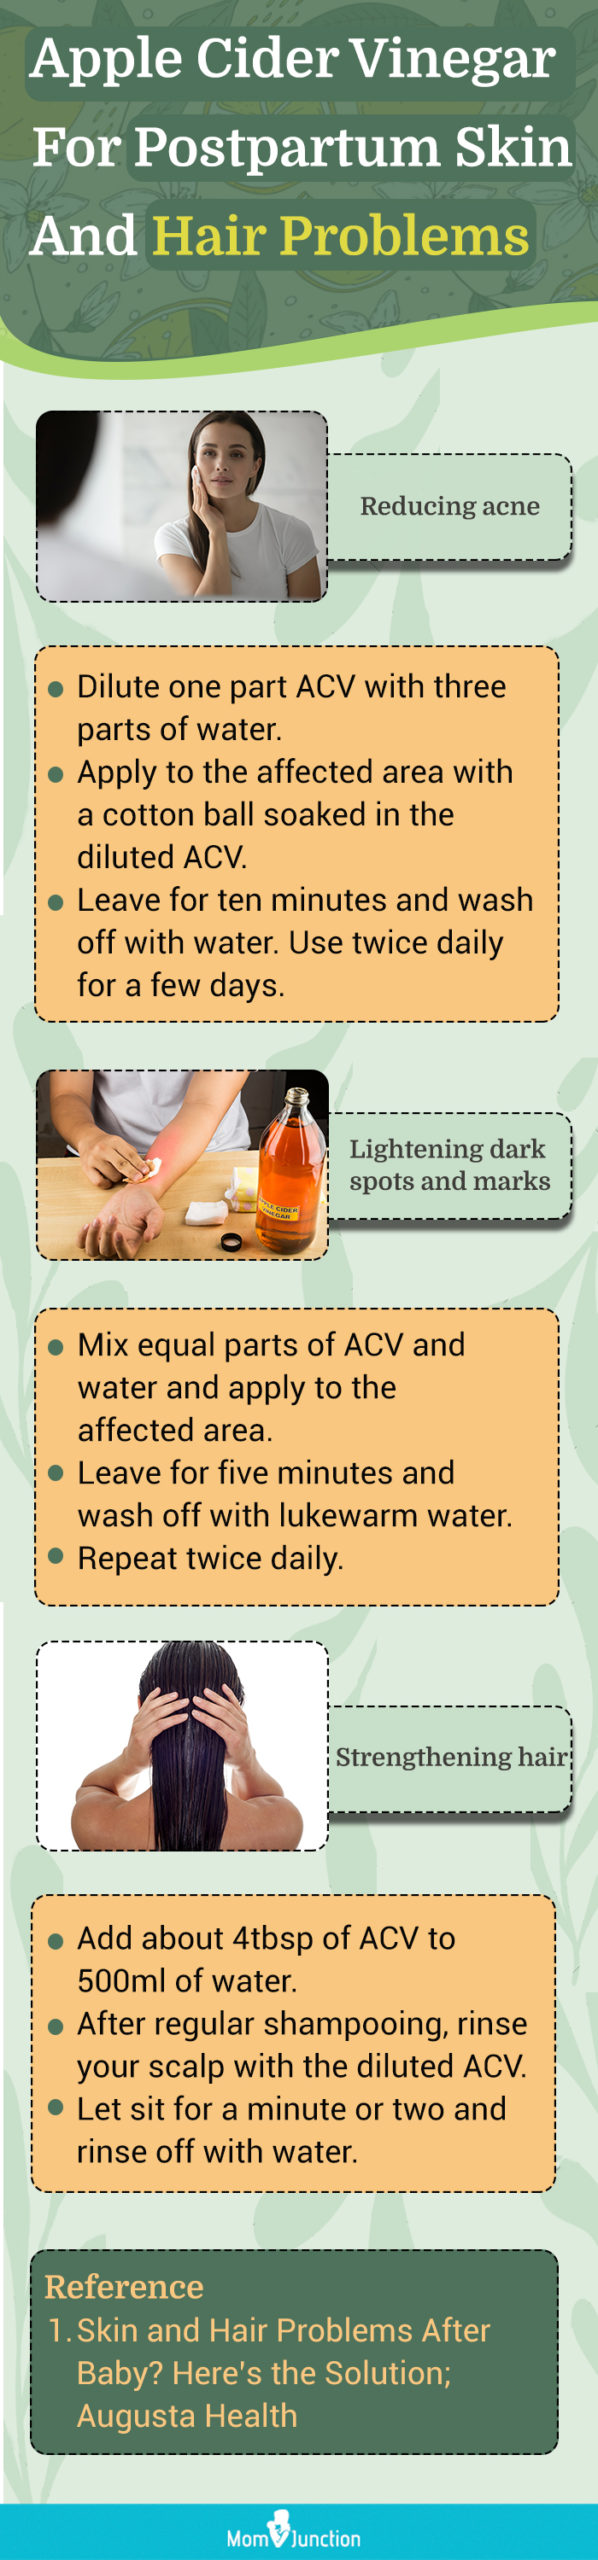 apple cider vinegar for postpartum skin and hair problems (infographic)